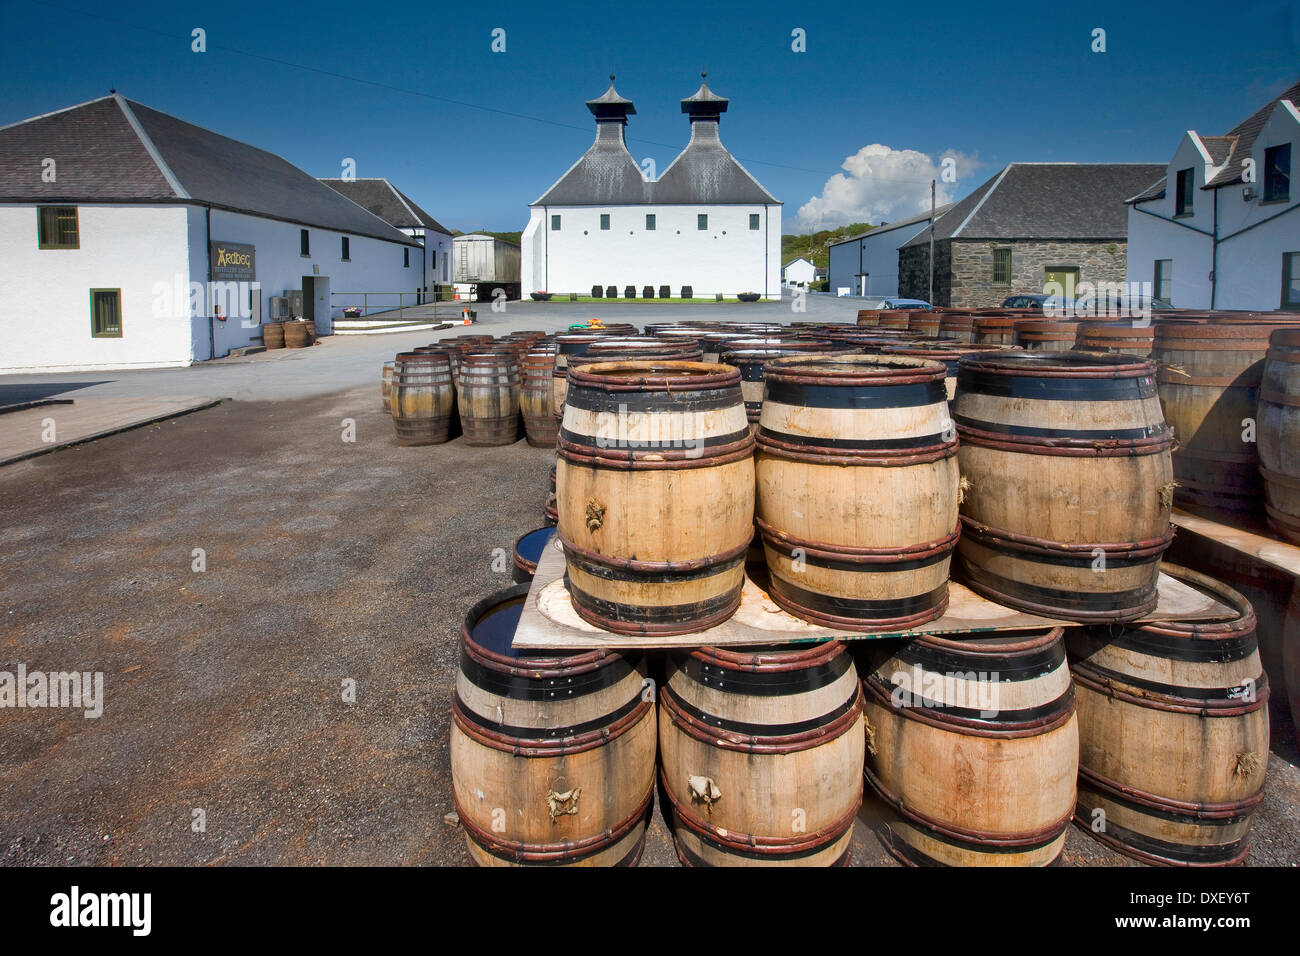 Ardbeg Distillery, Islay Foto Stock